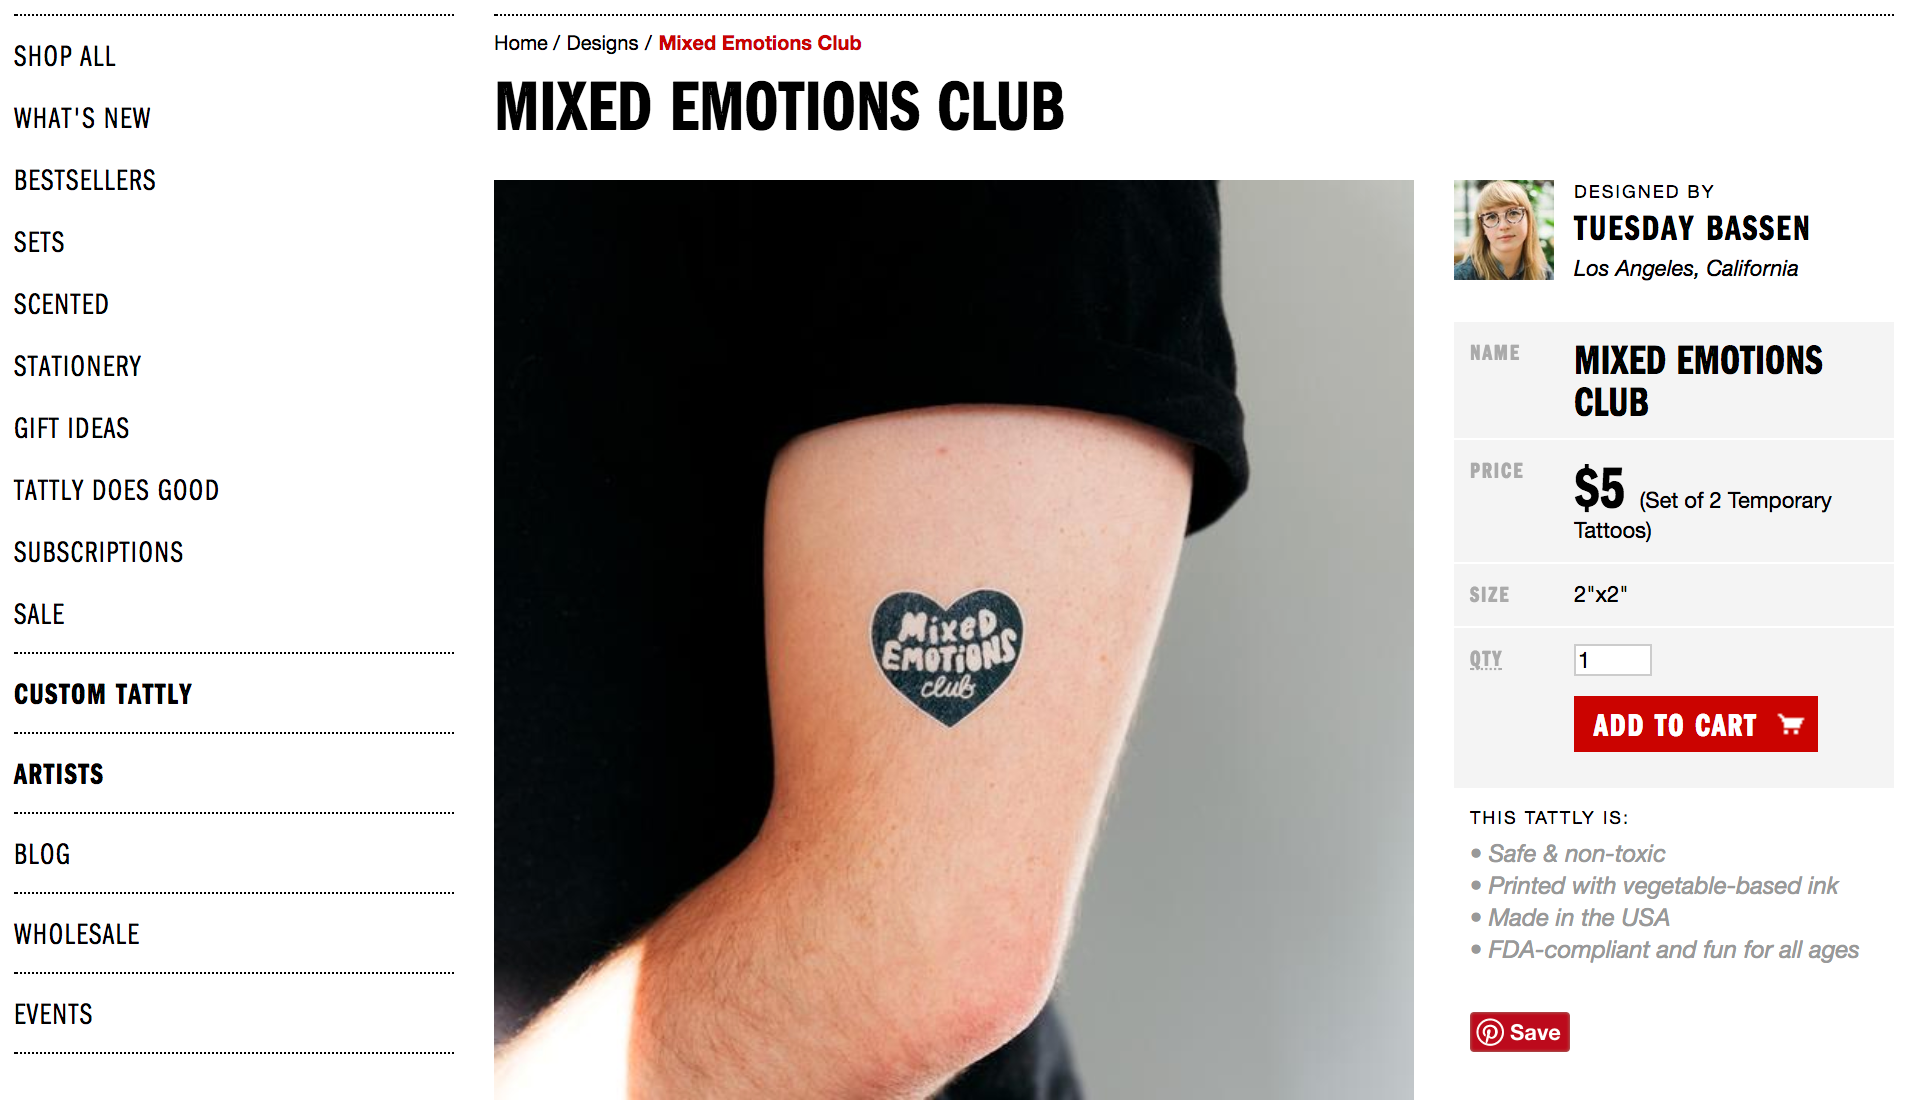 Mixed Emotions Club tattoo on arm